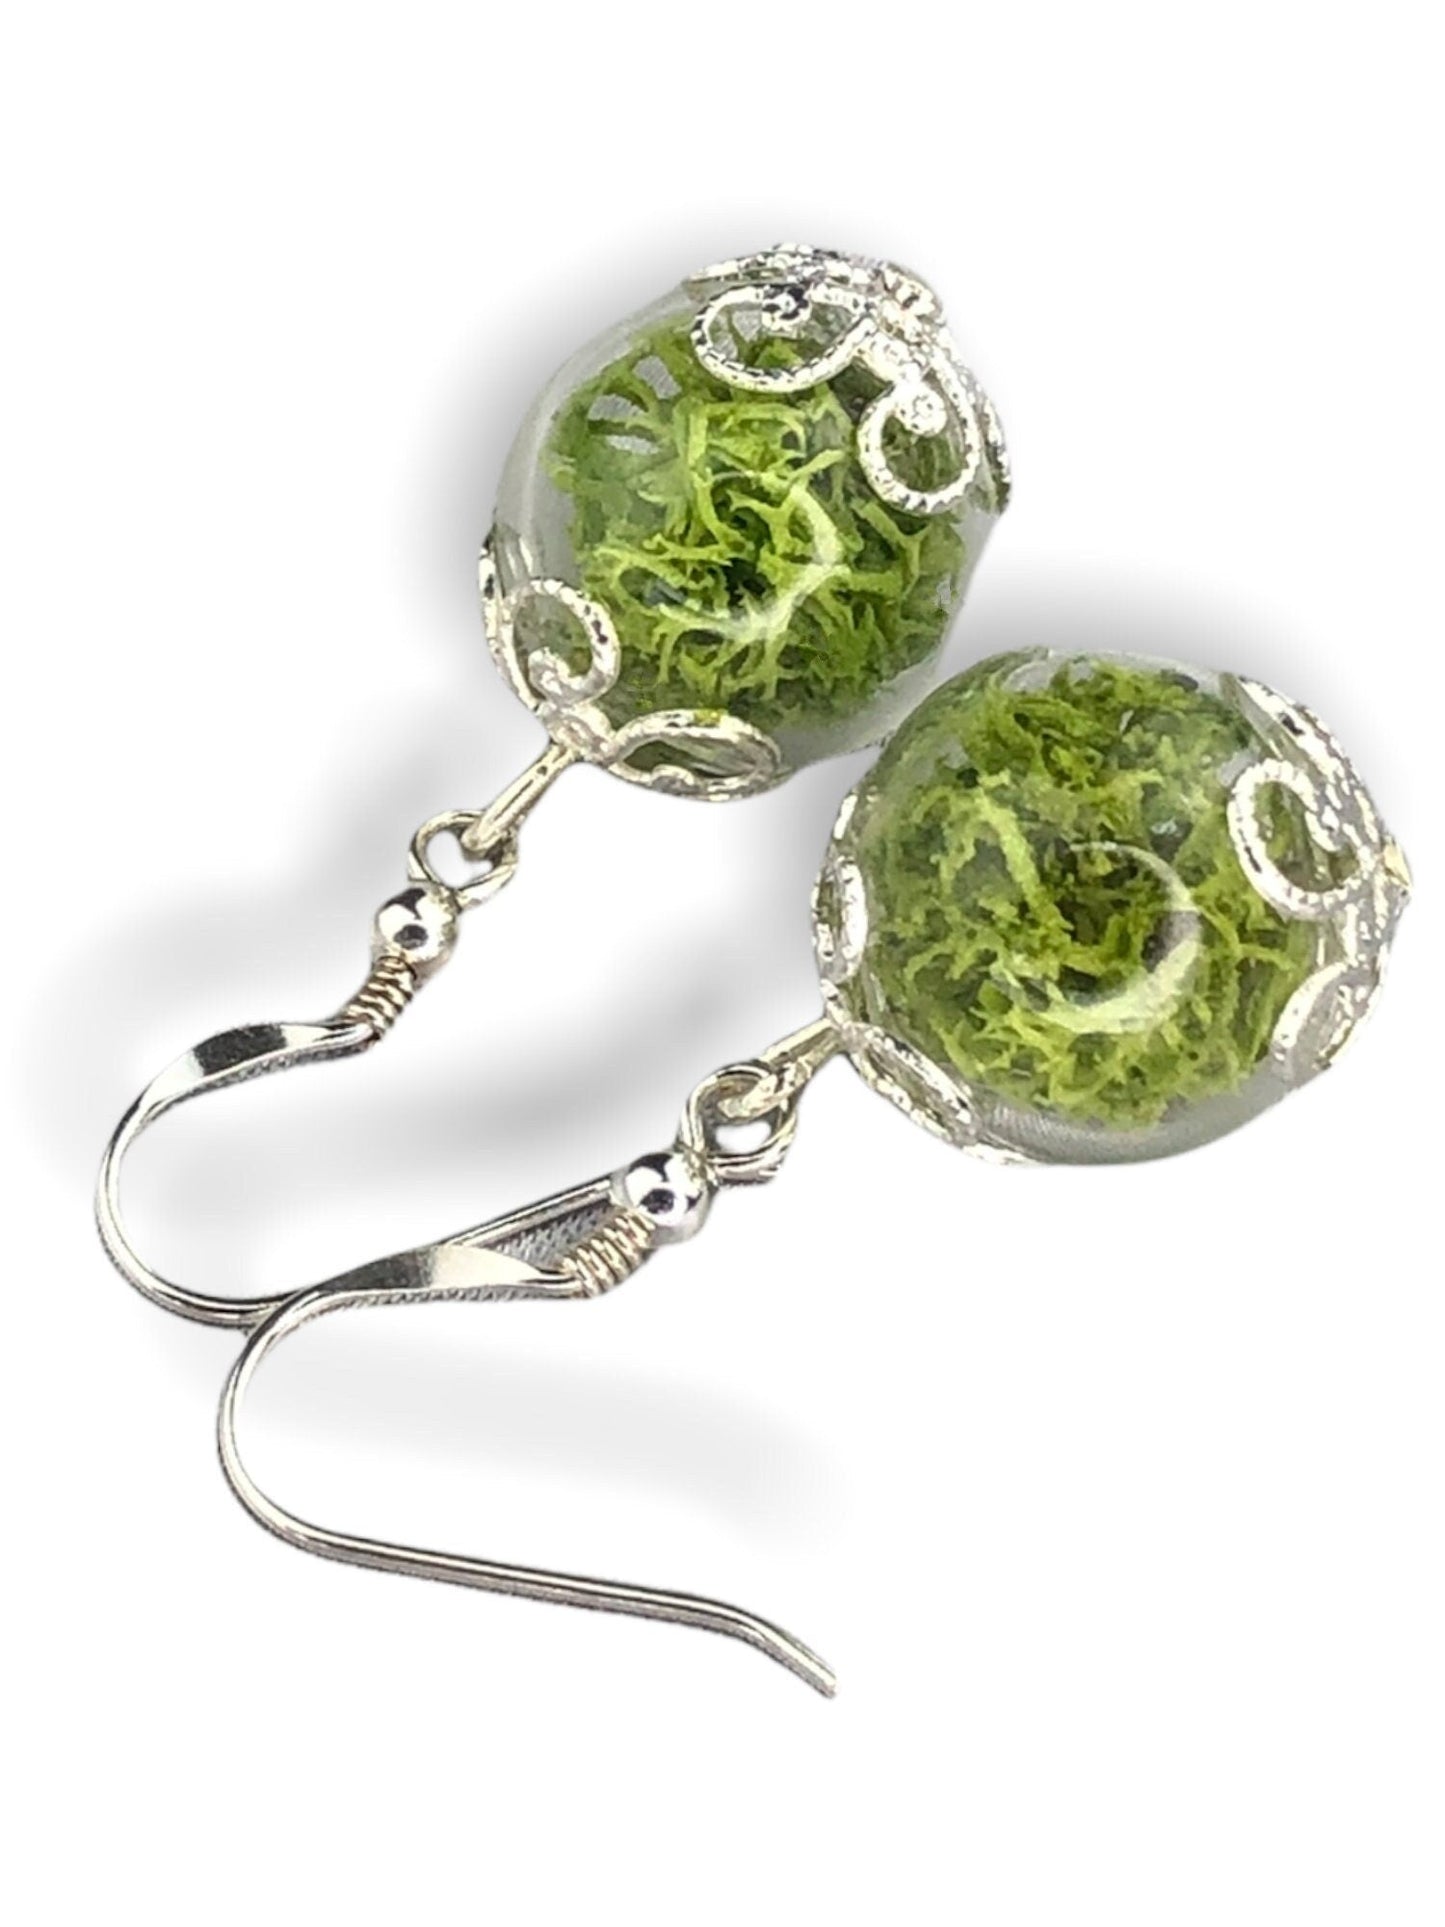 Real Moos Earrings - 925 Sterling Silver Jewelry - Botanical Terrarium Earrings - Ear925-10